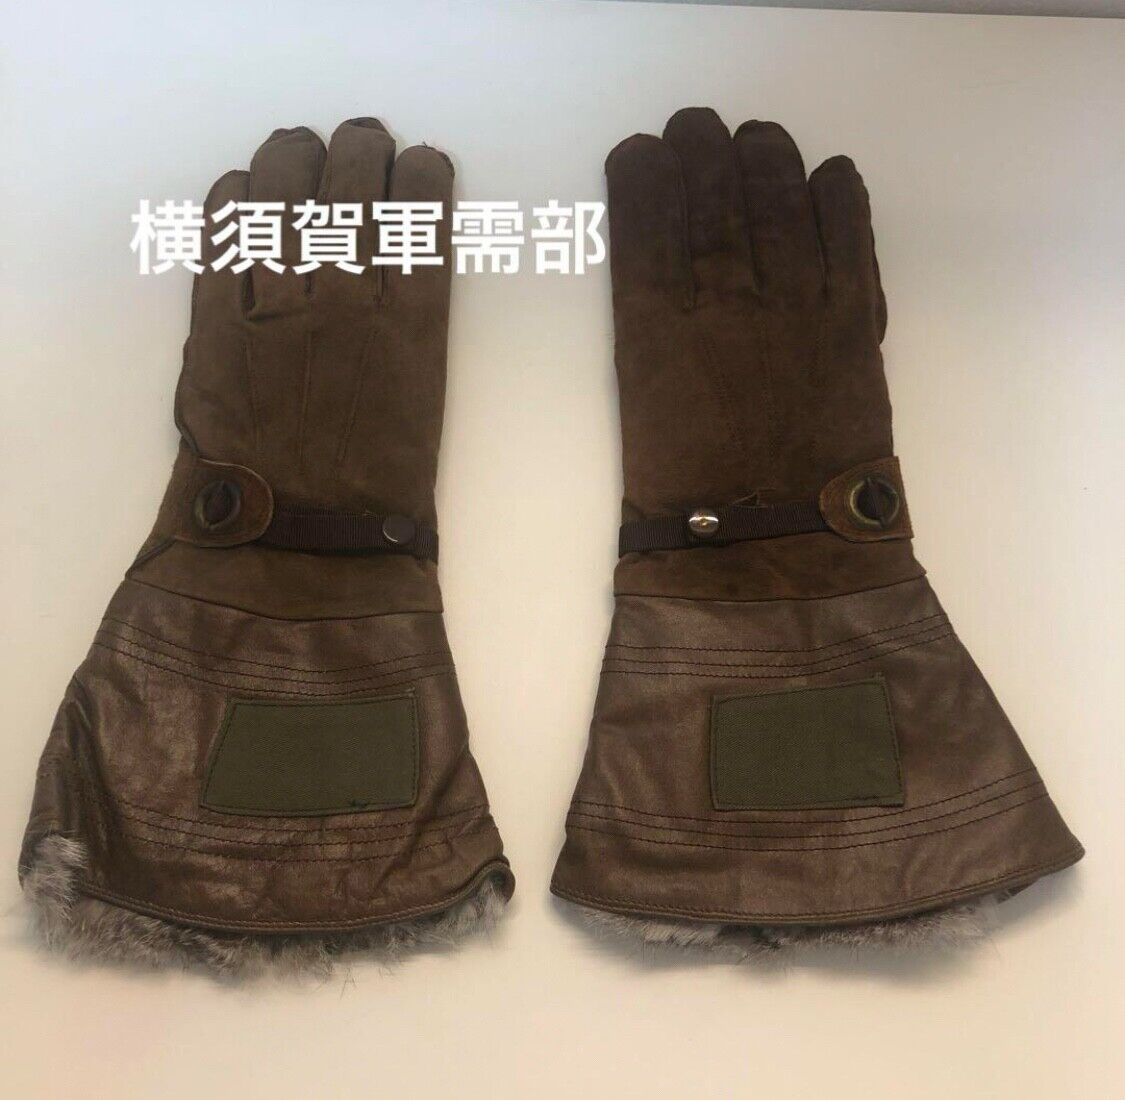 Worldwar2 replica imperial japanese navy aviation leather gloves glove brown